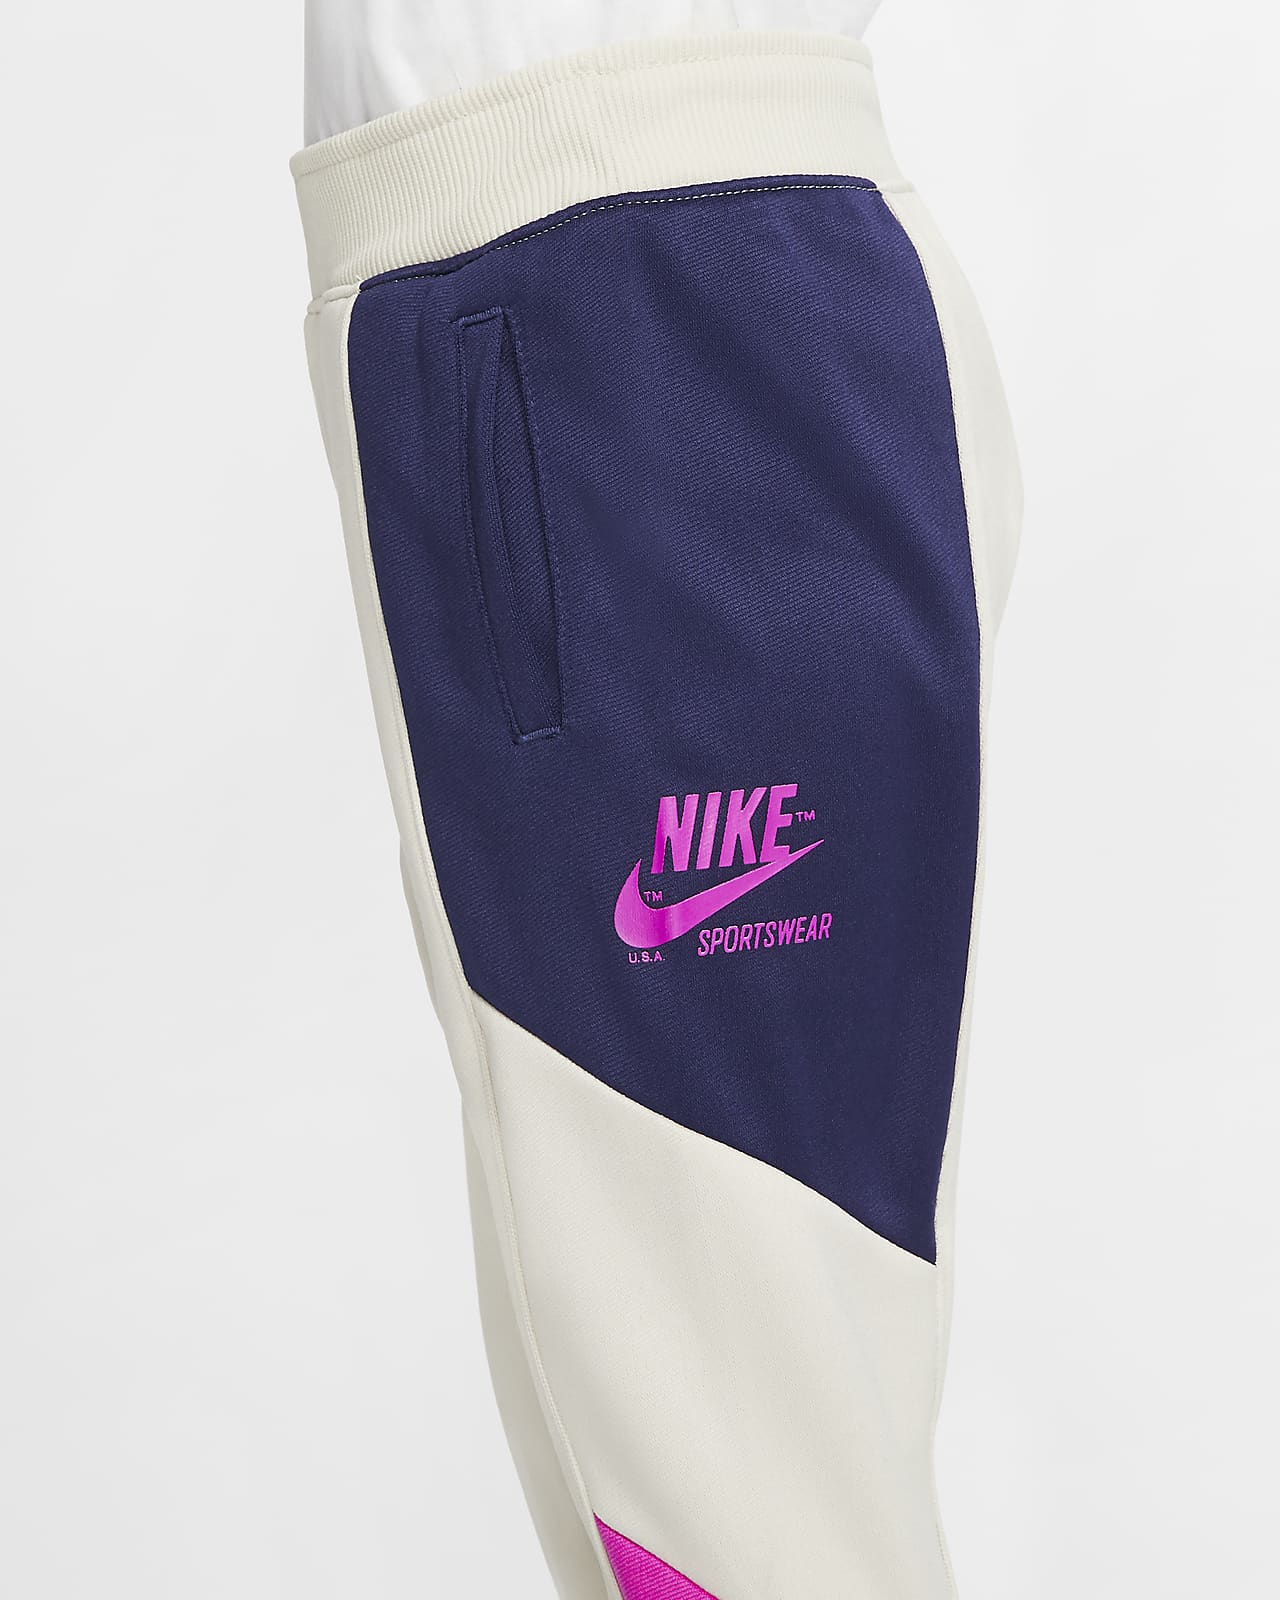 Nike Sportswear Pants. Toddler Cuffed